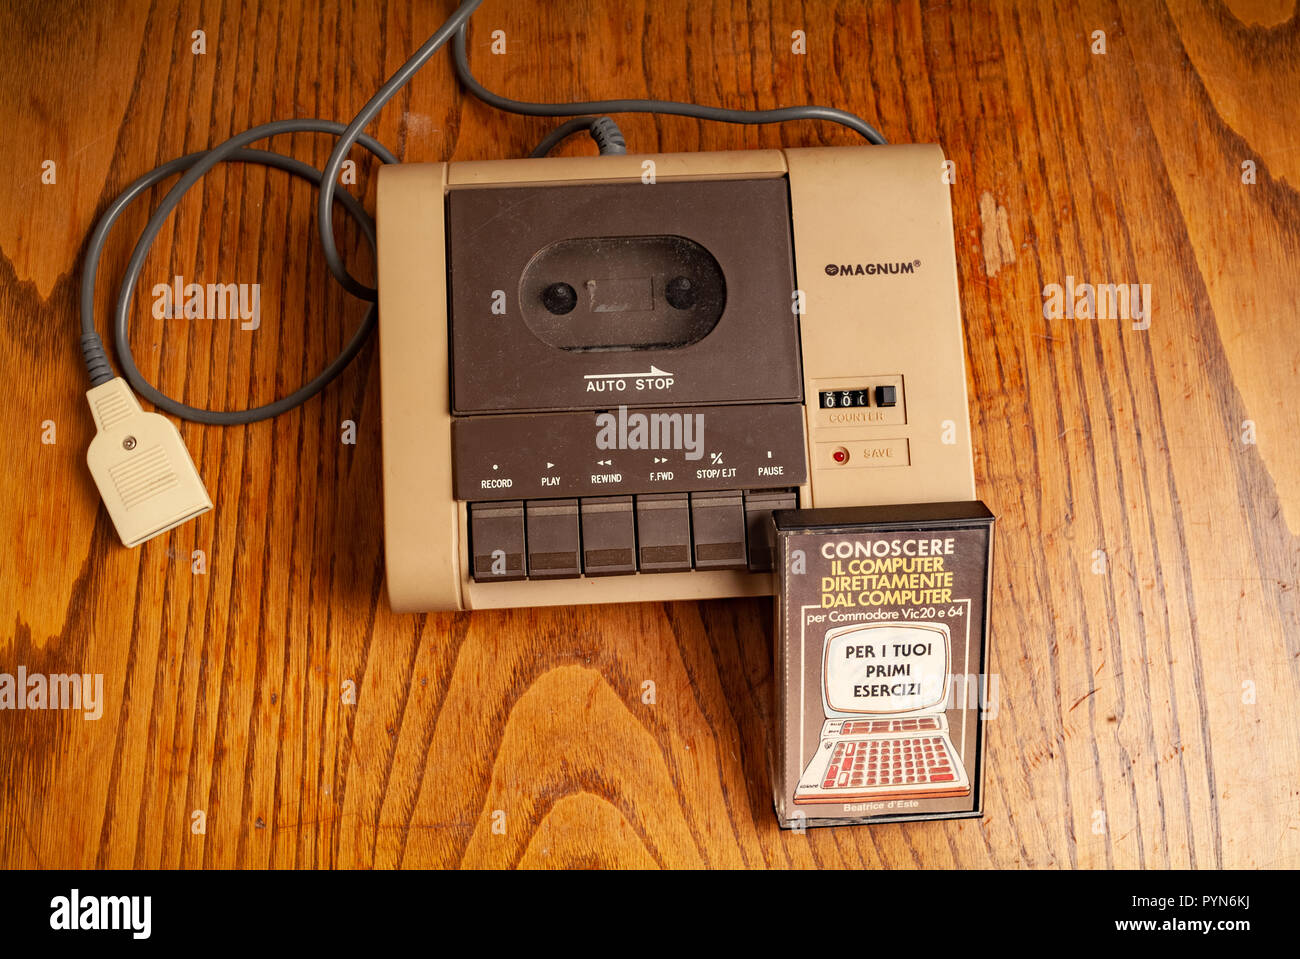 Commodore 64 1980s tape cassette reader Stock Photo